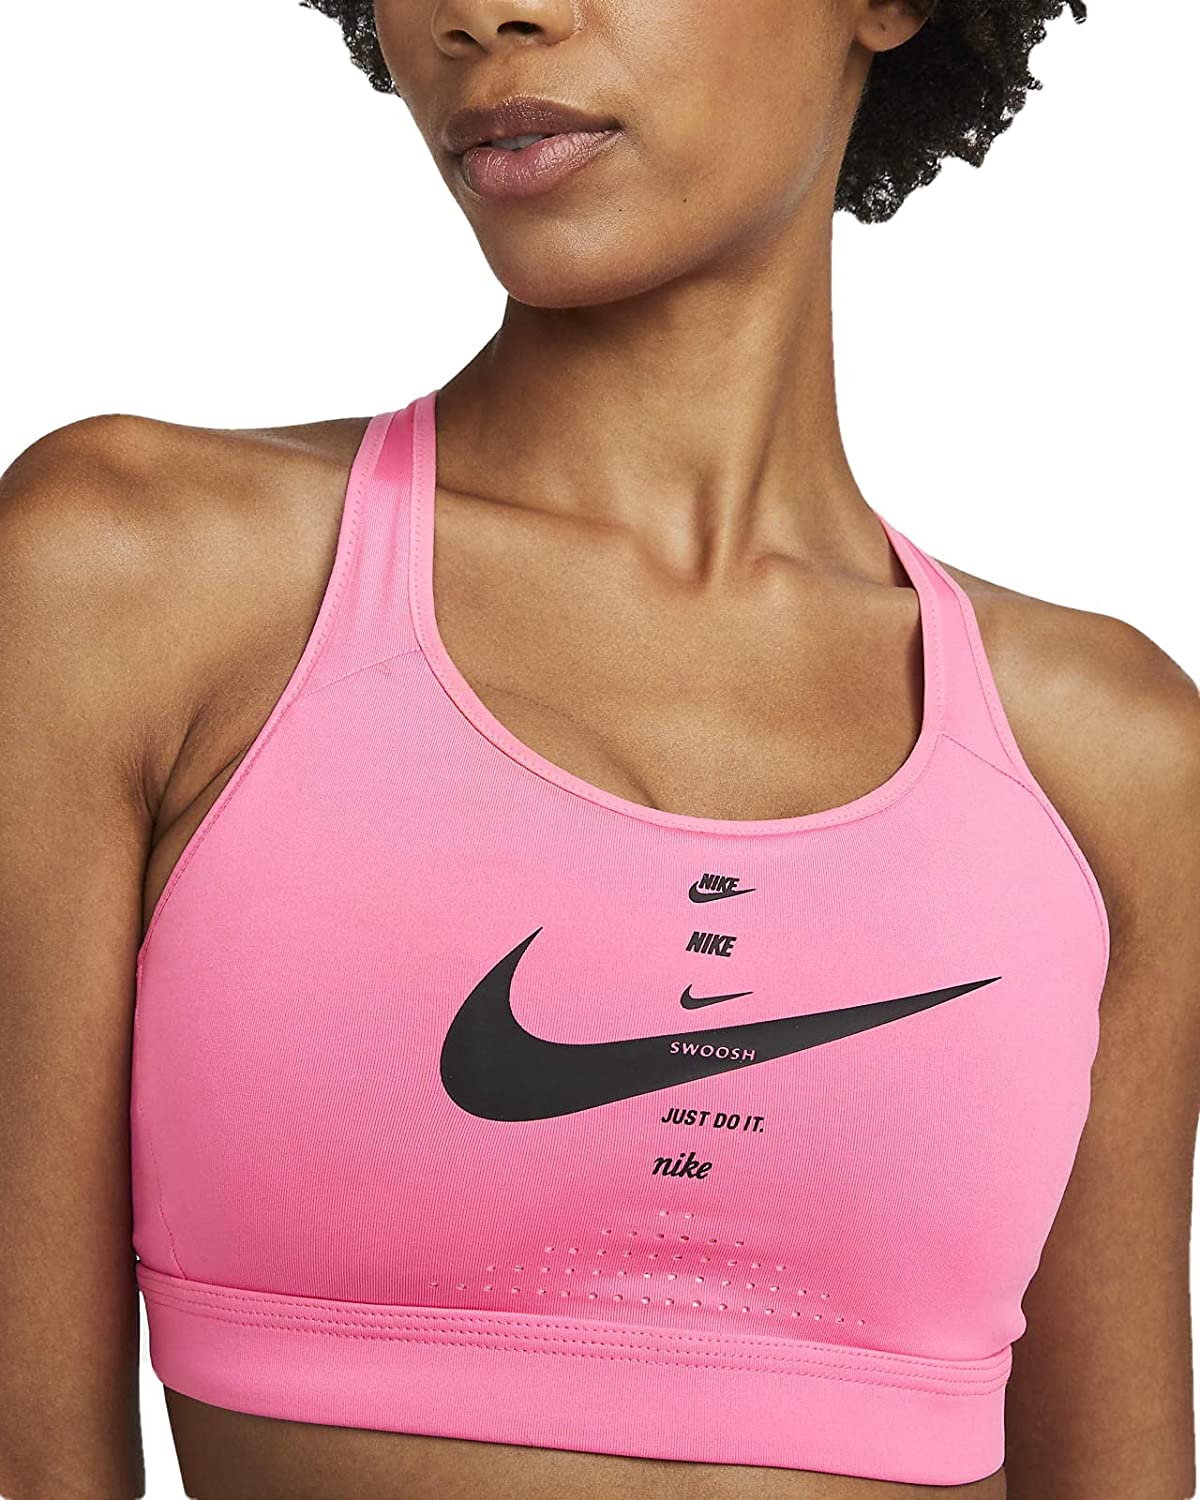 Nike Bra WholeSale - Price List, Bulk Buy at